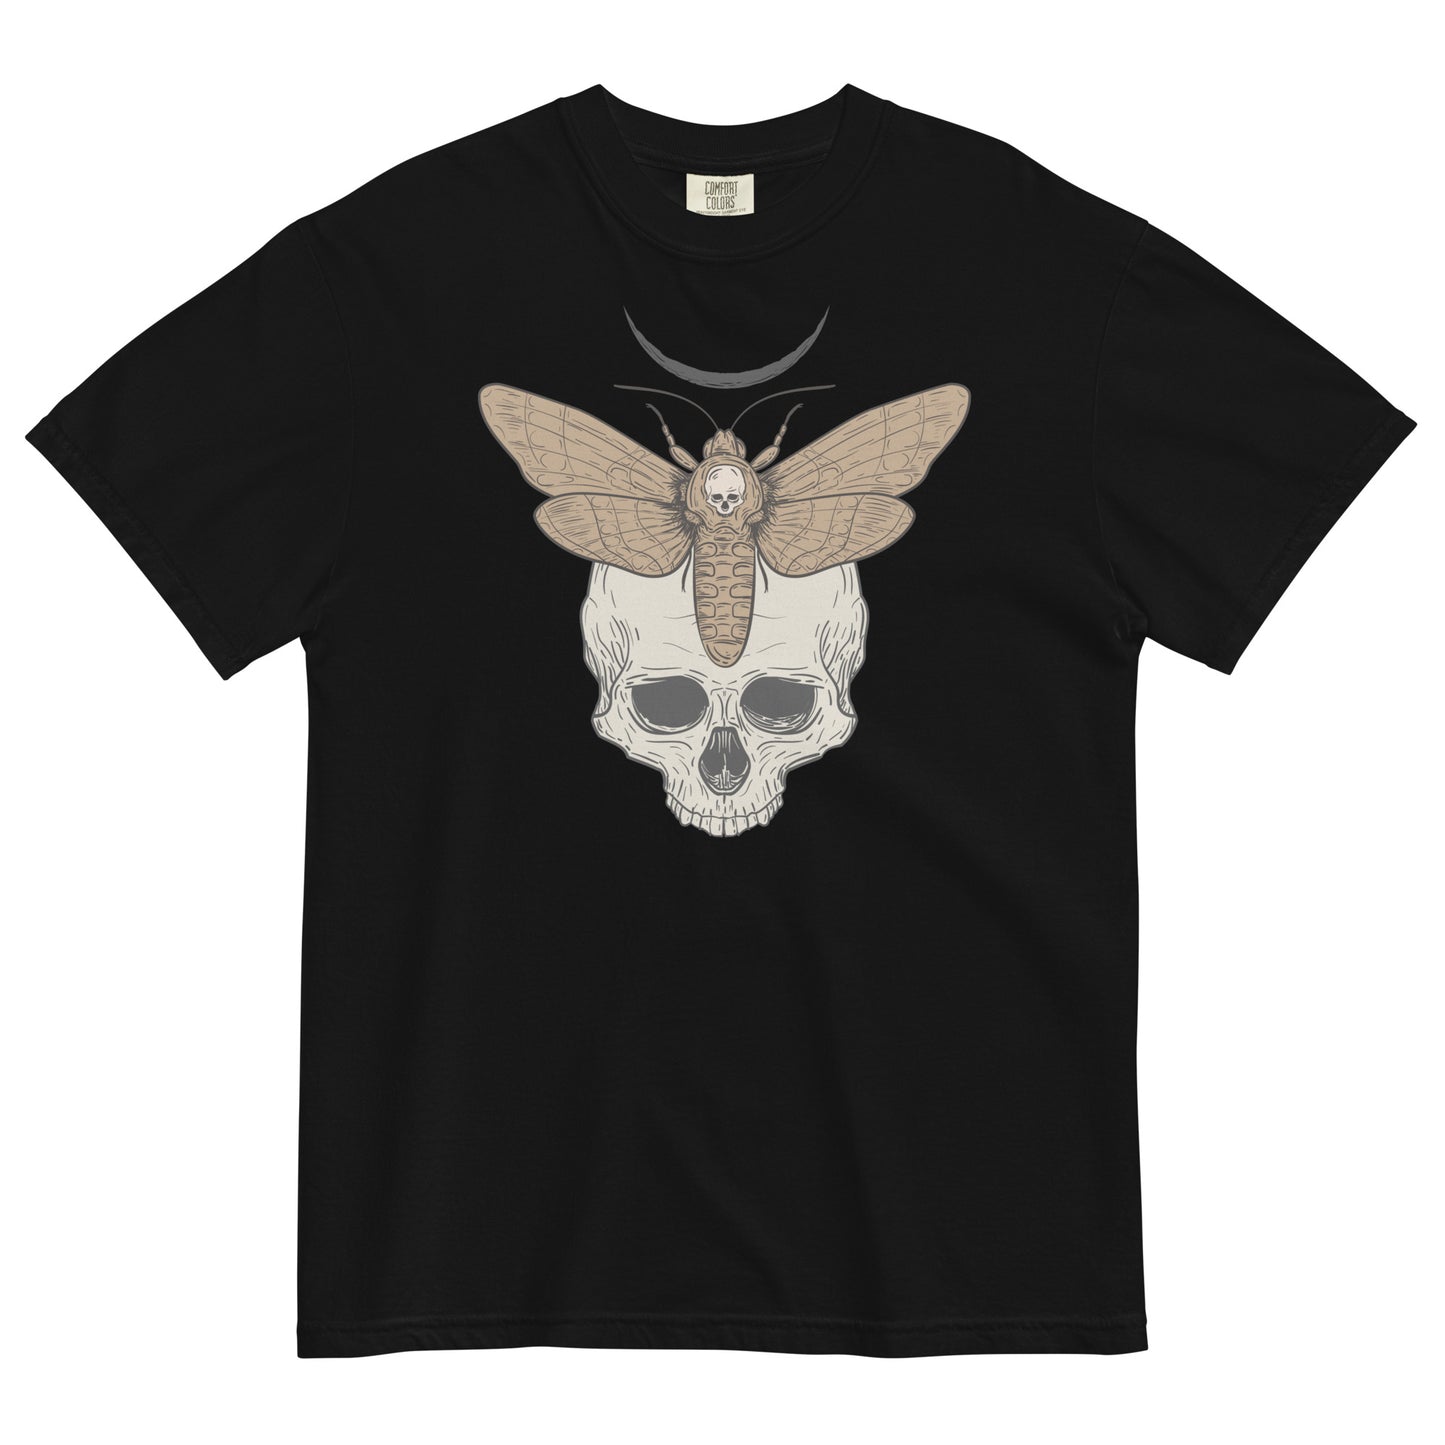 Deathmoth and Skull  t-shirt